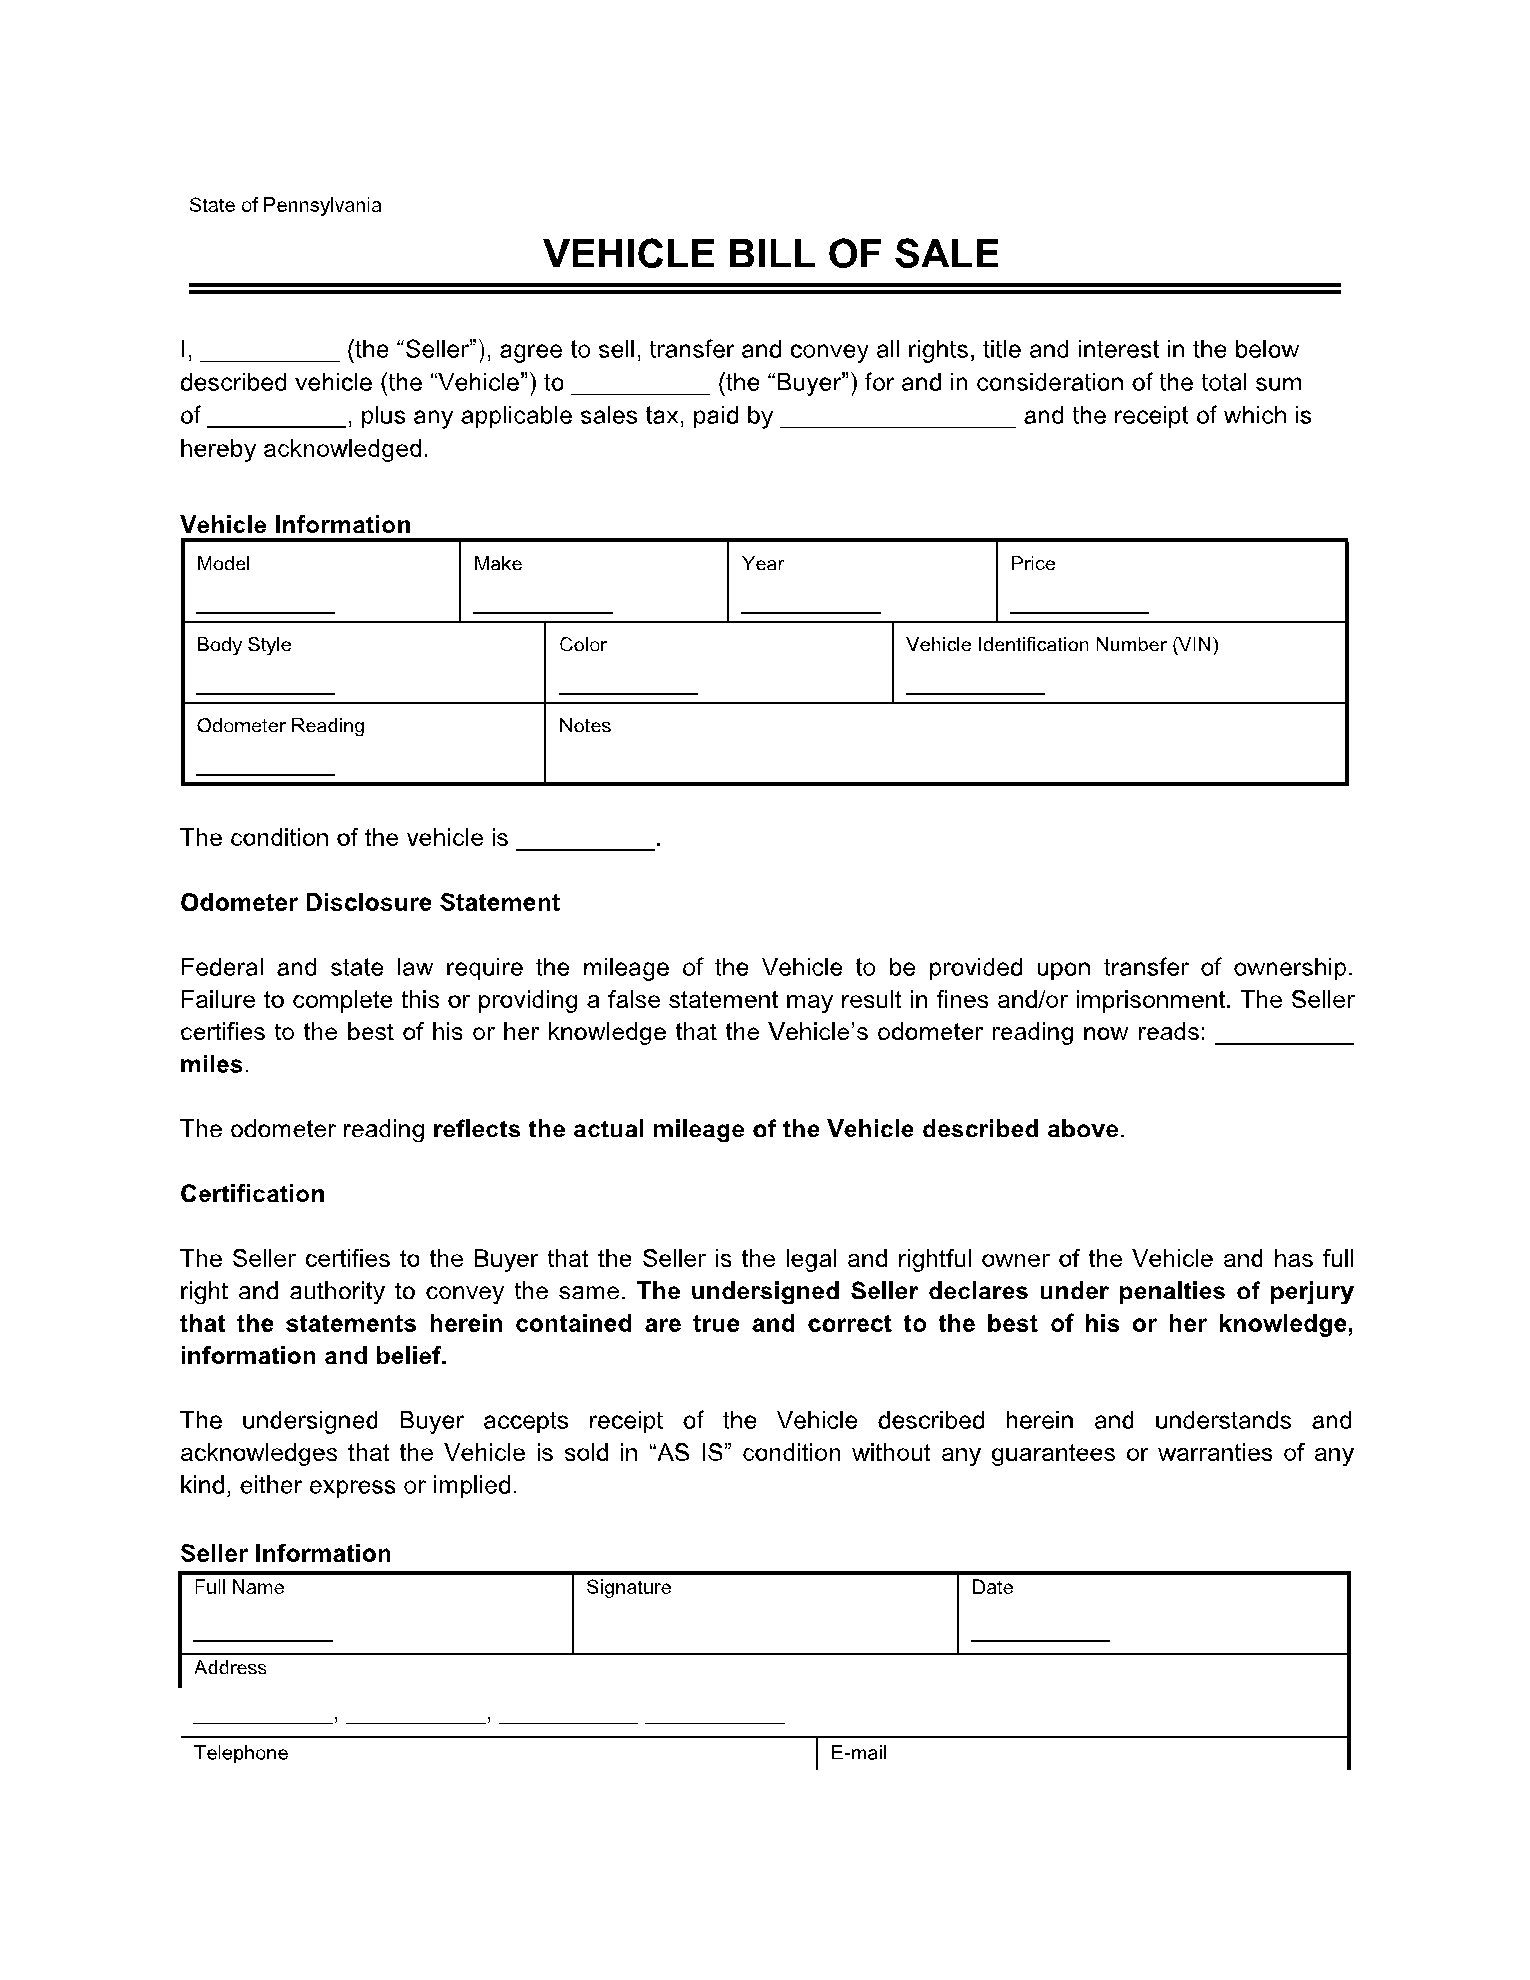 Pennsylvania Vehicle Bill of Sale 1